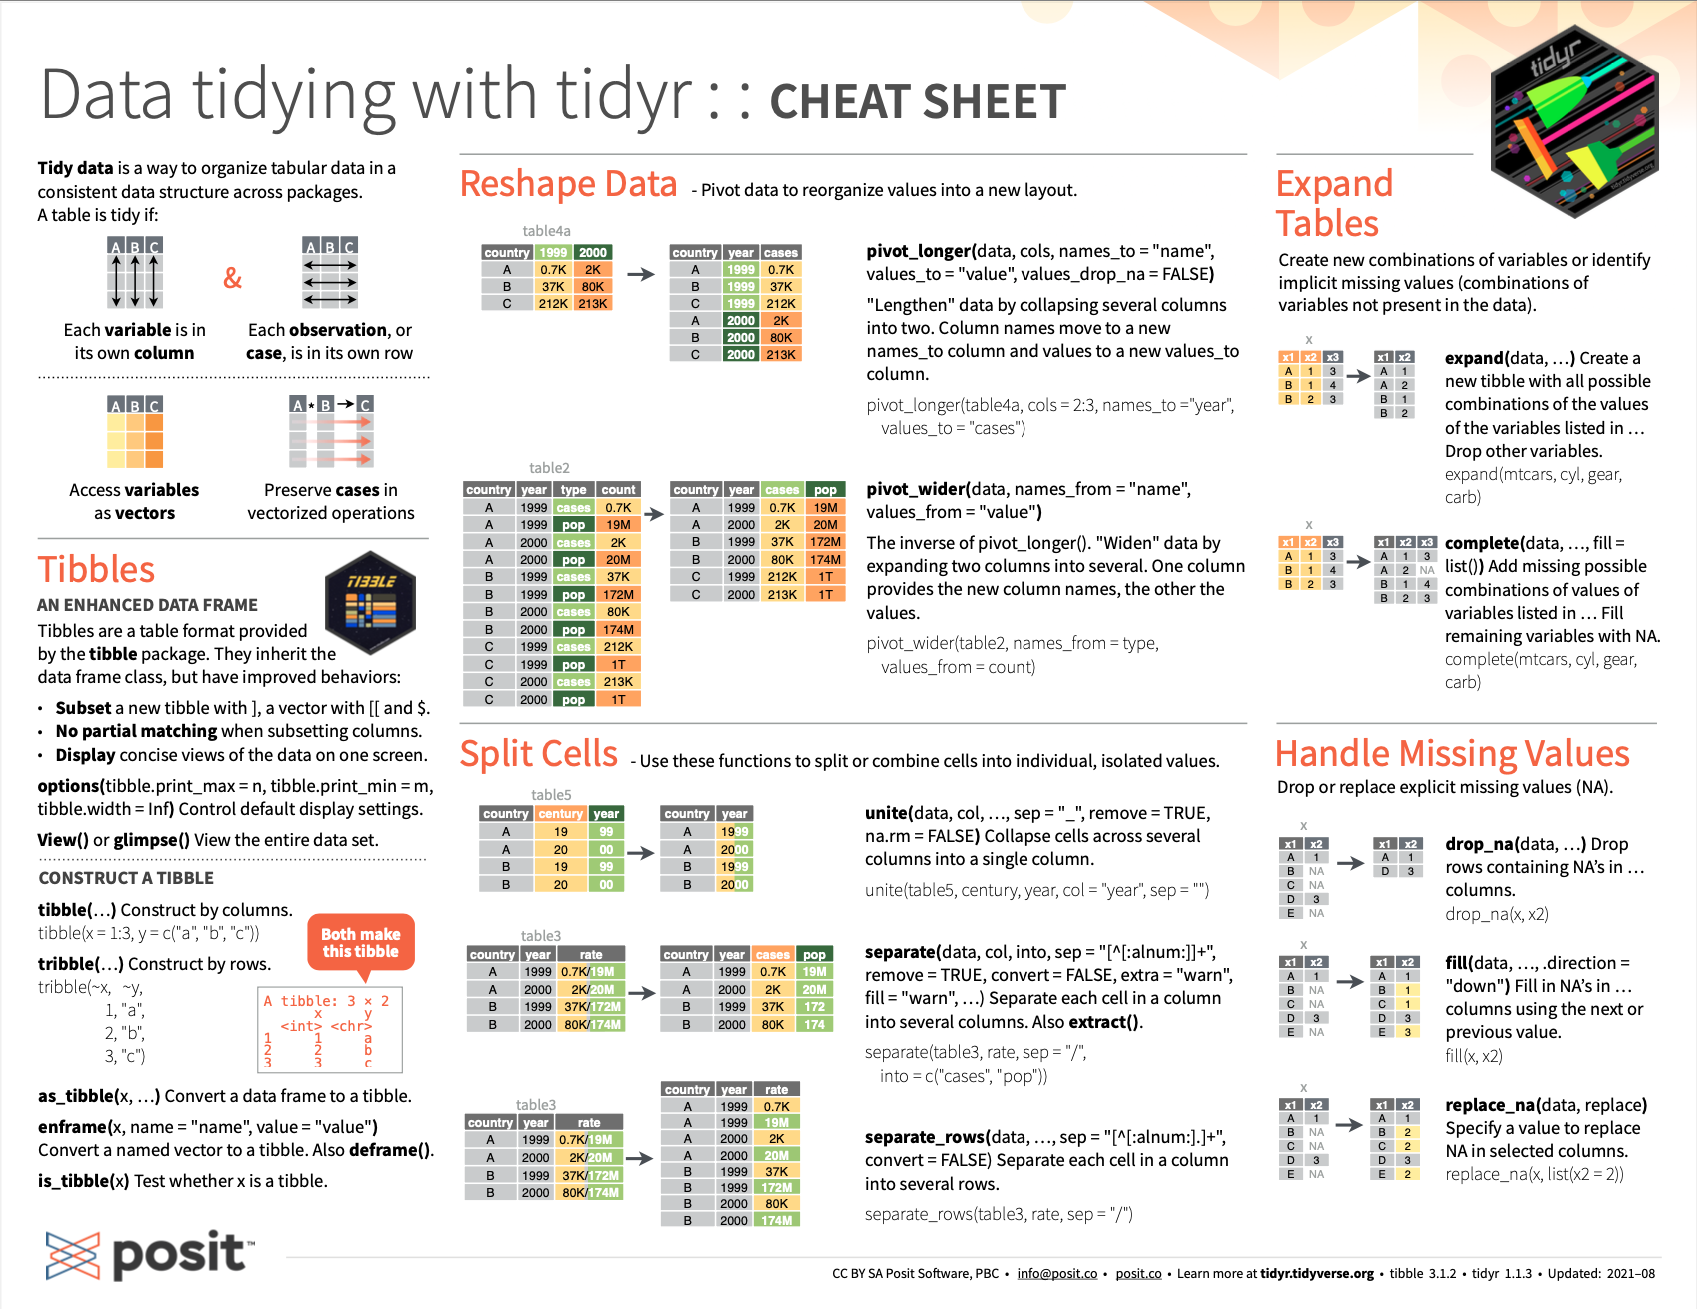 The RStudio cheatsheet on tidying data with tidyr functions.